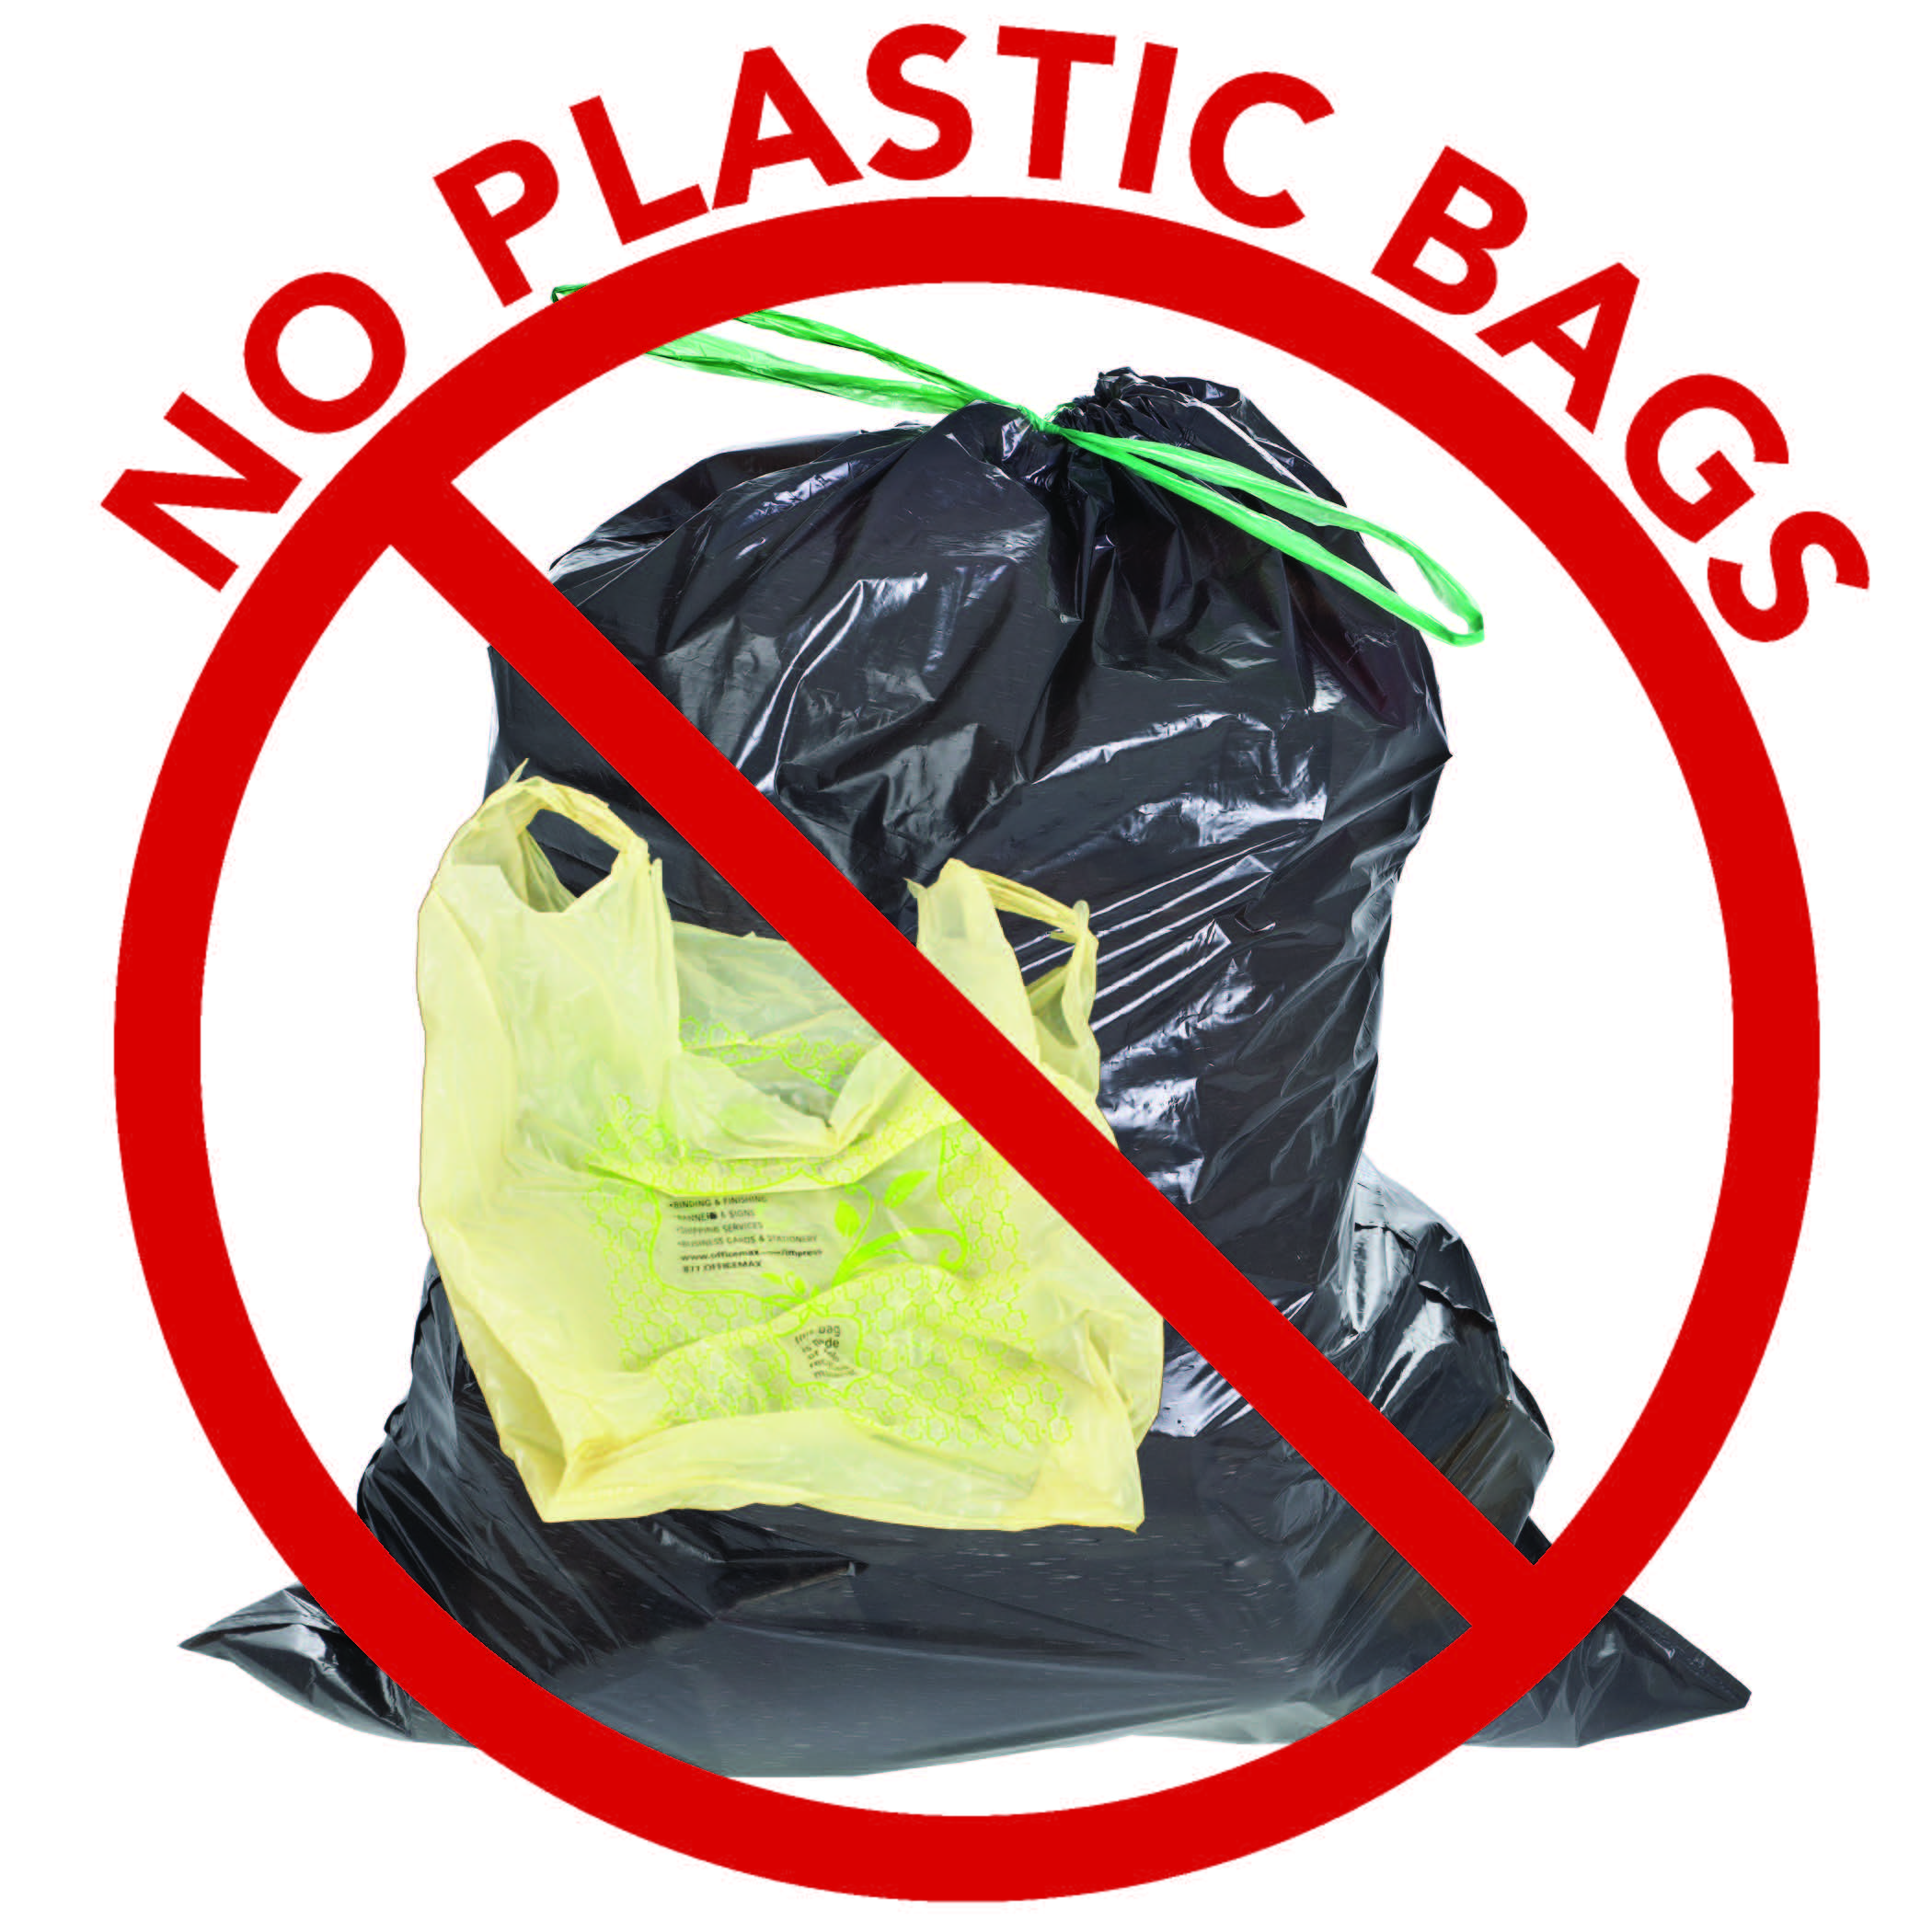 No plastic or trash bag